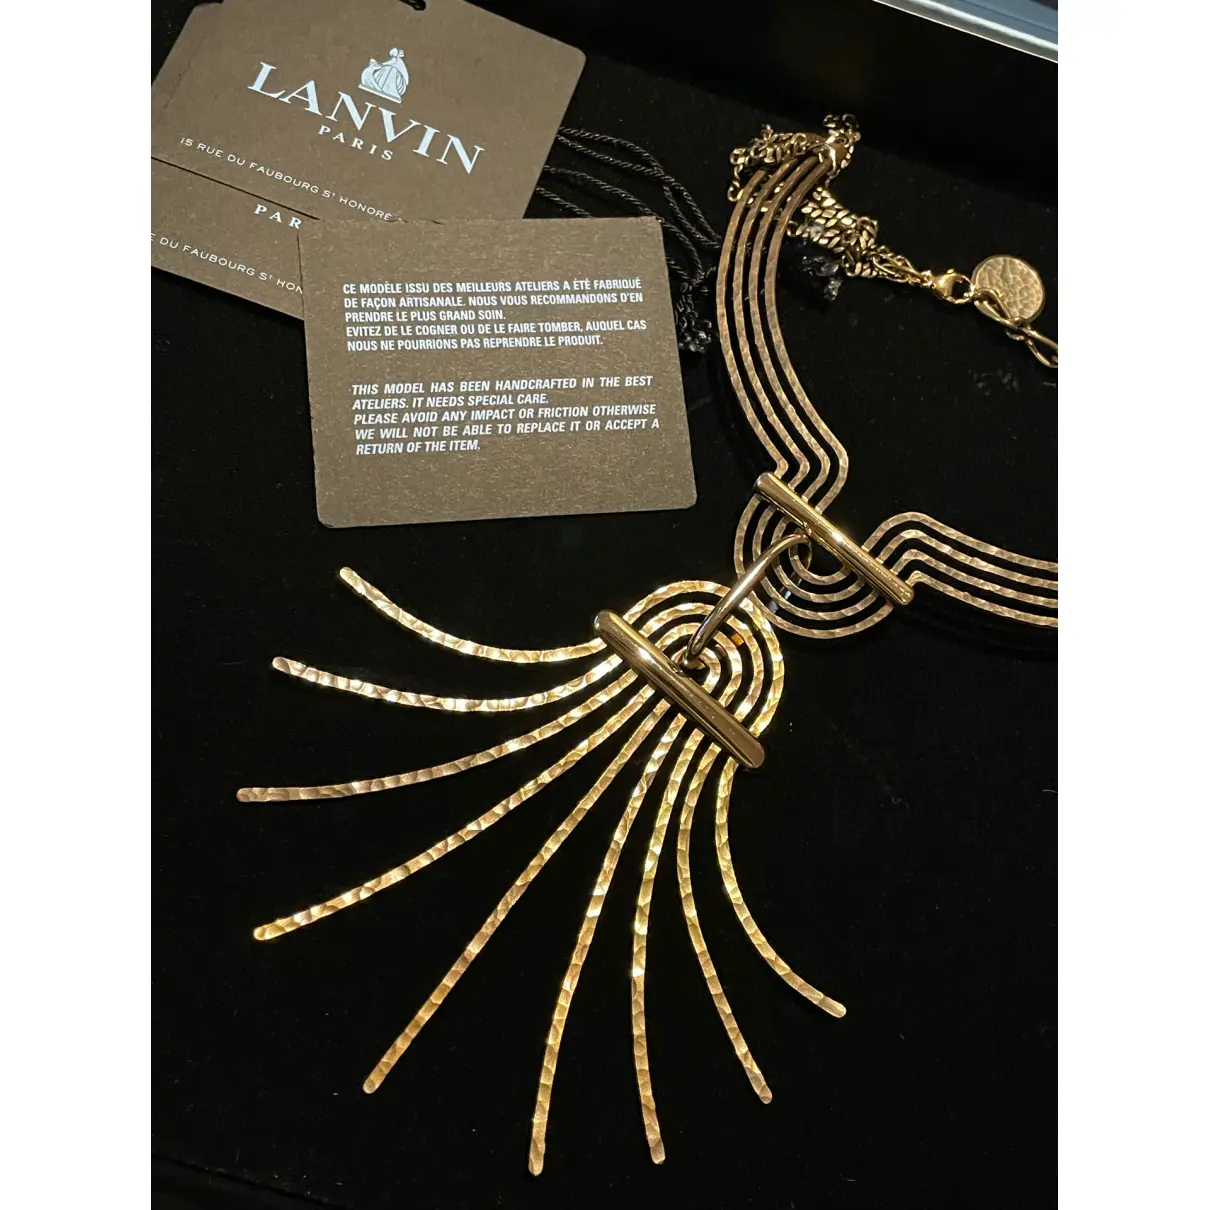 Buy Lanvin Necklace online